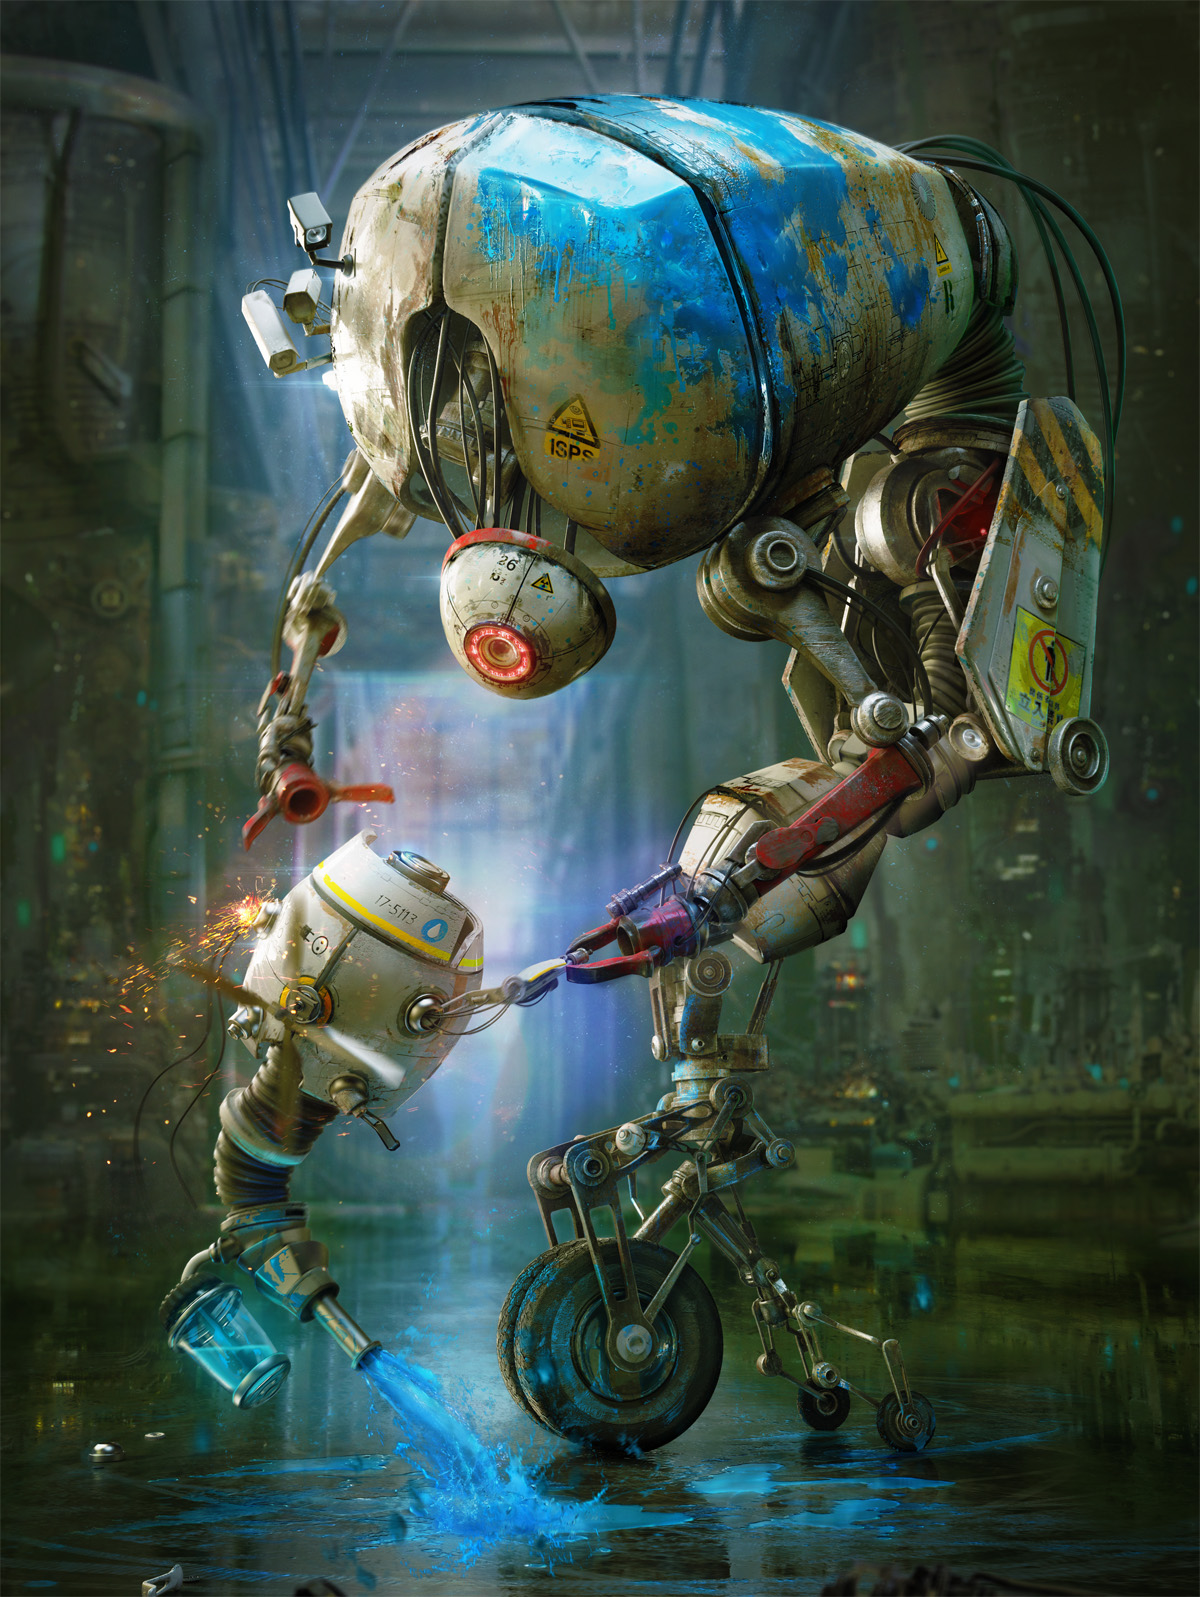 “Painting Robots” by Gleb Alexandrov